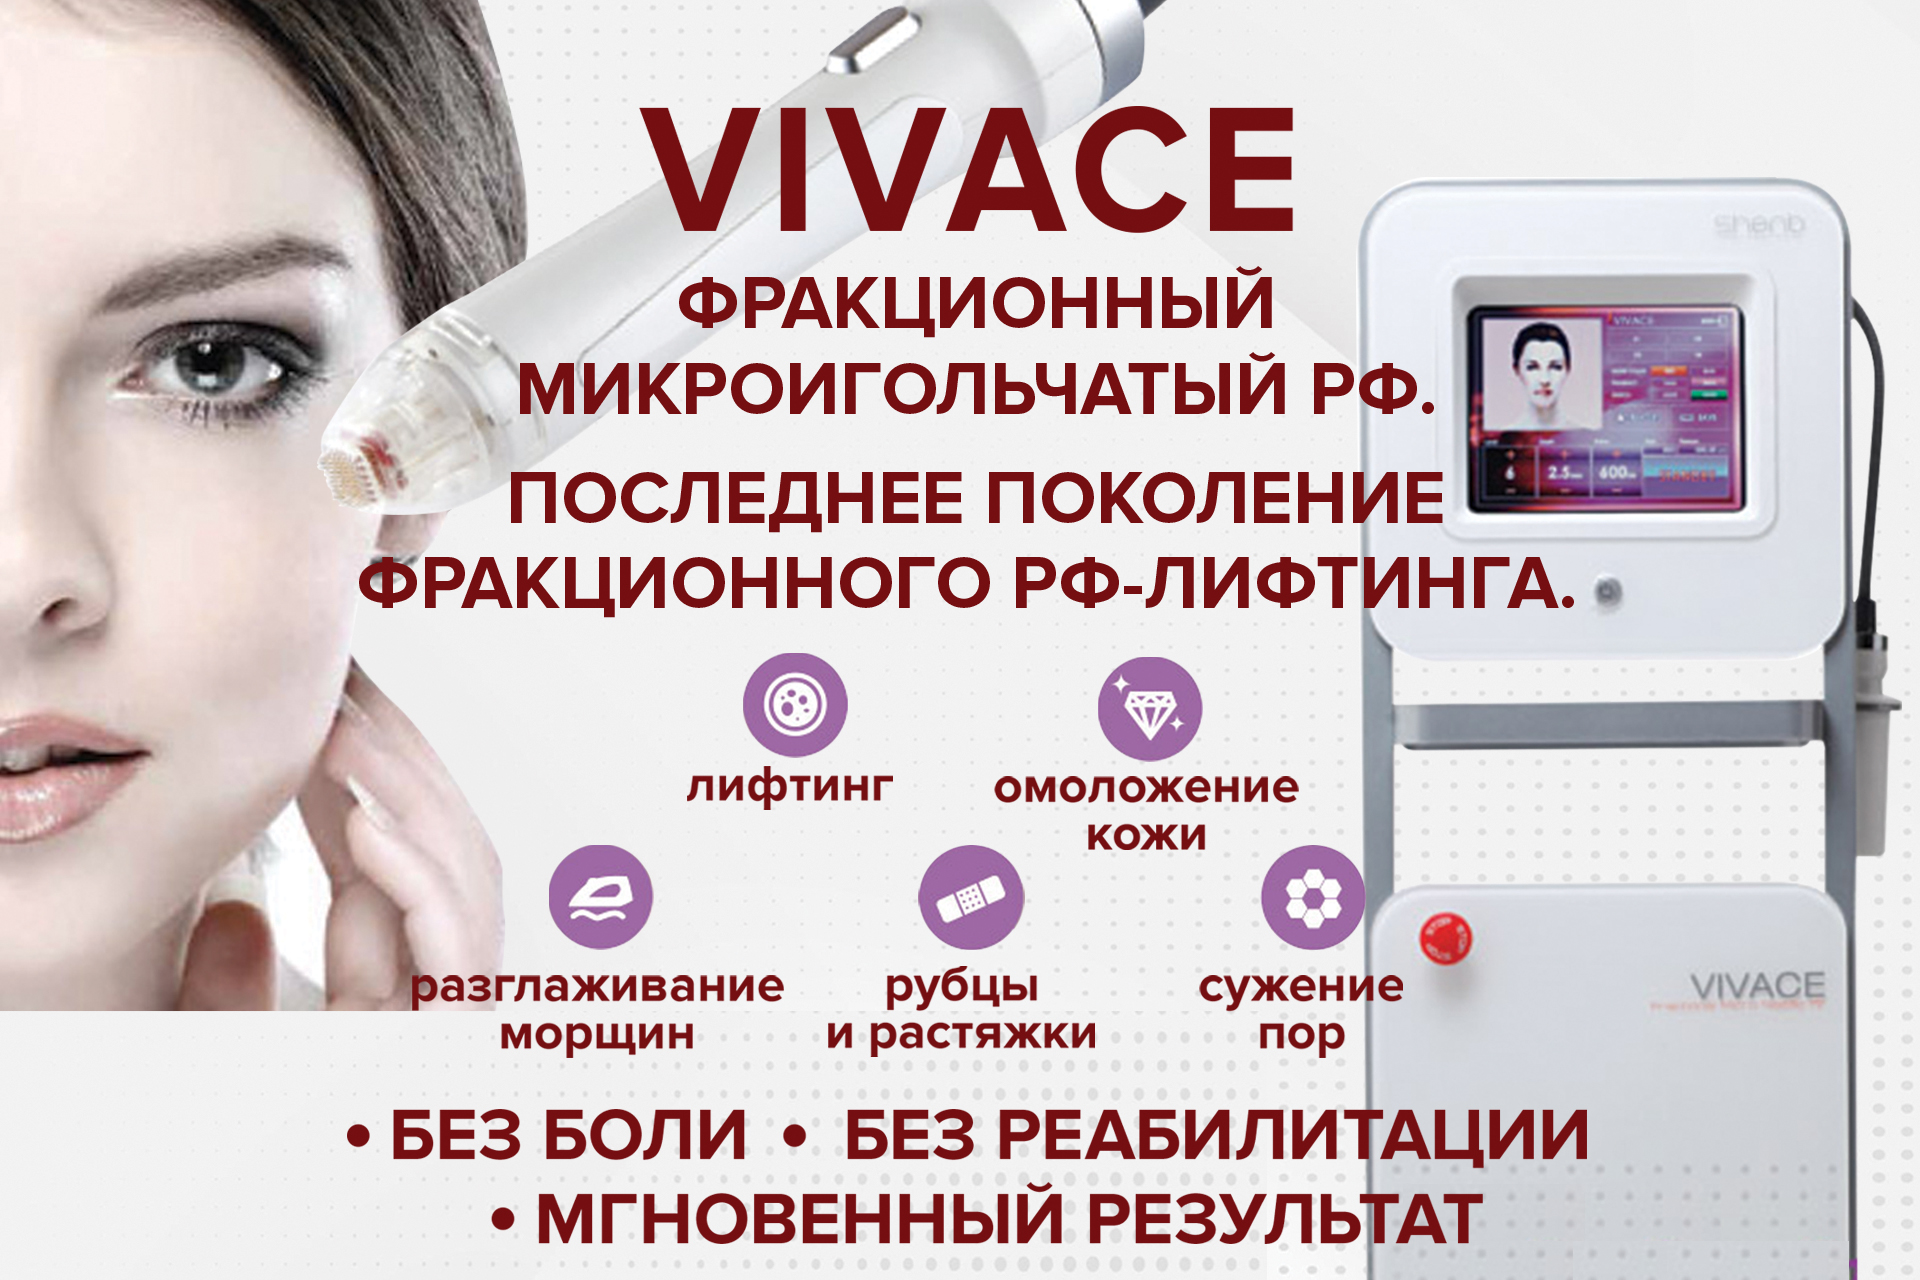 Vivace аппарат косметологии